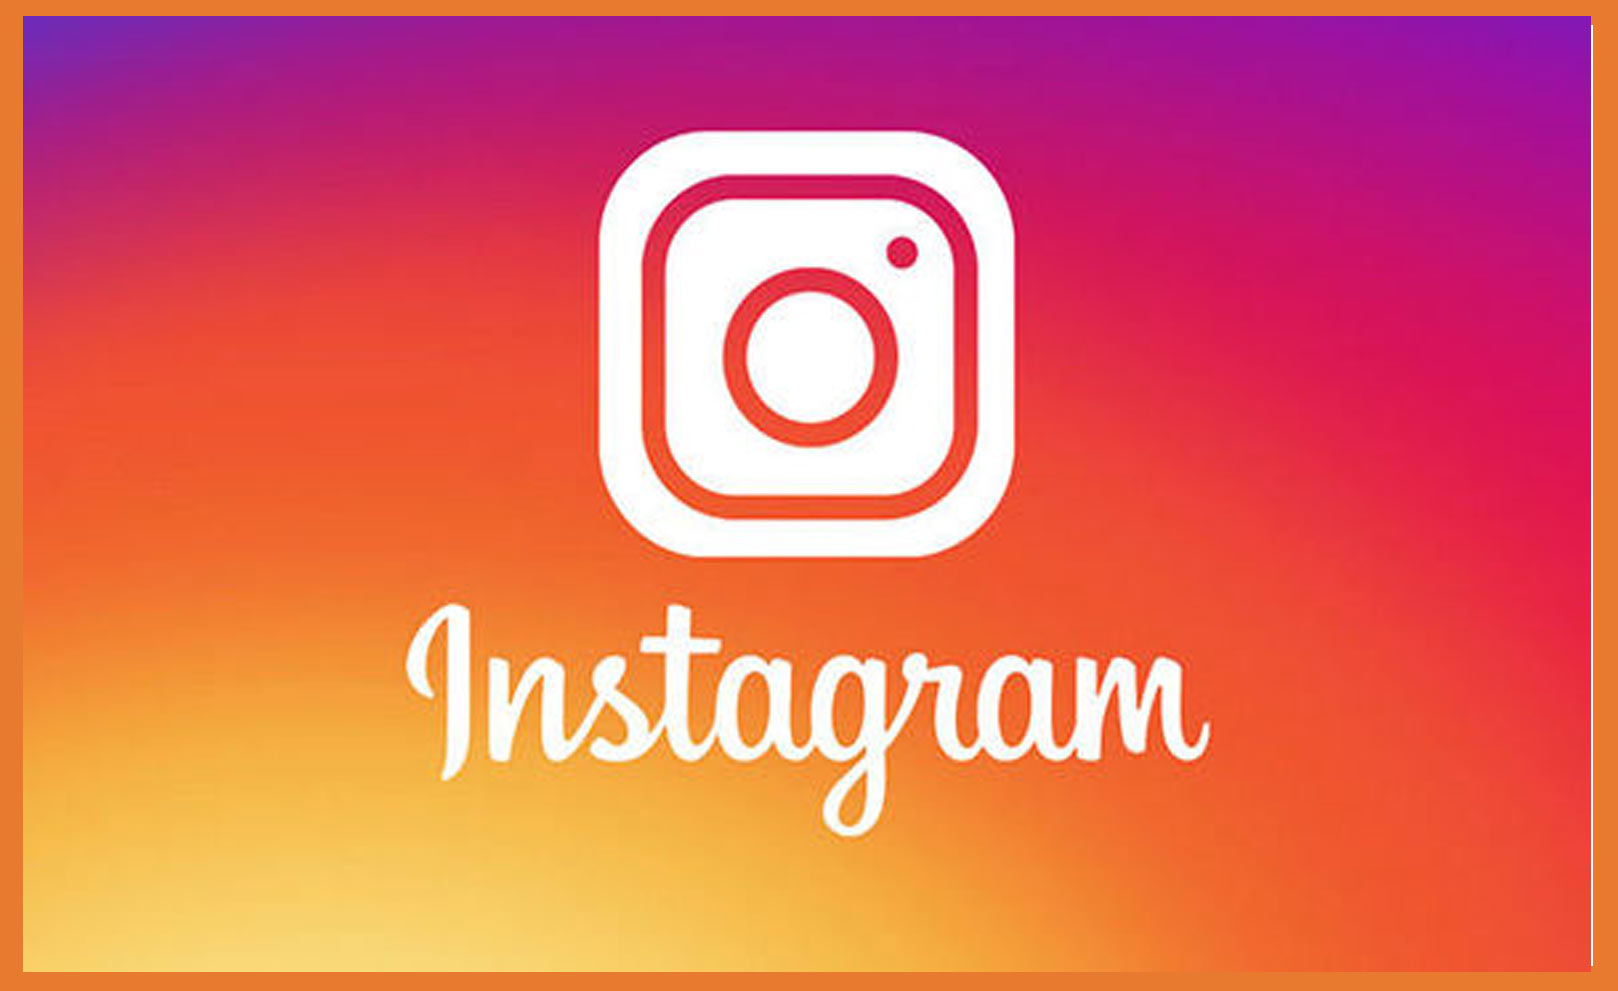 Instagram logo design